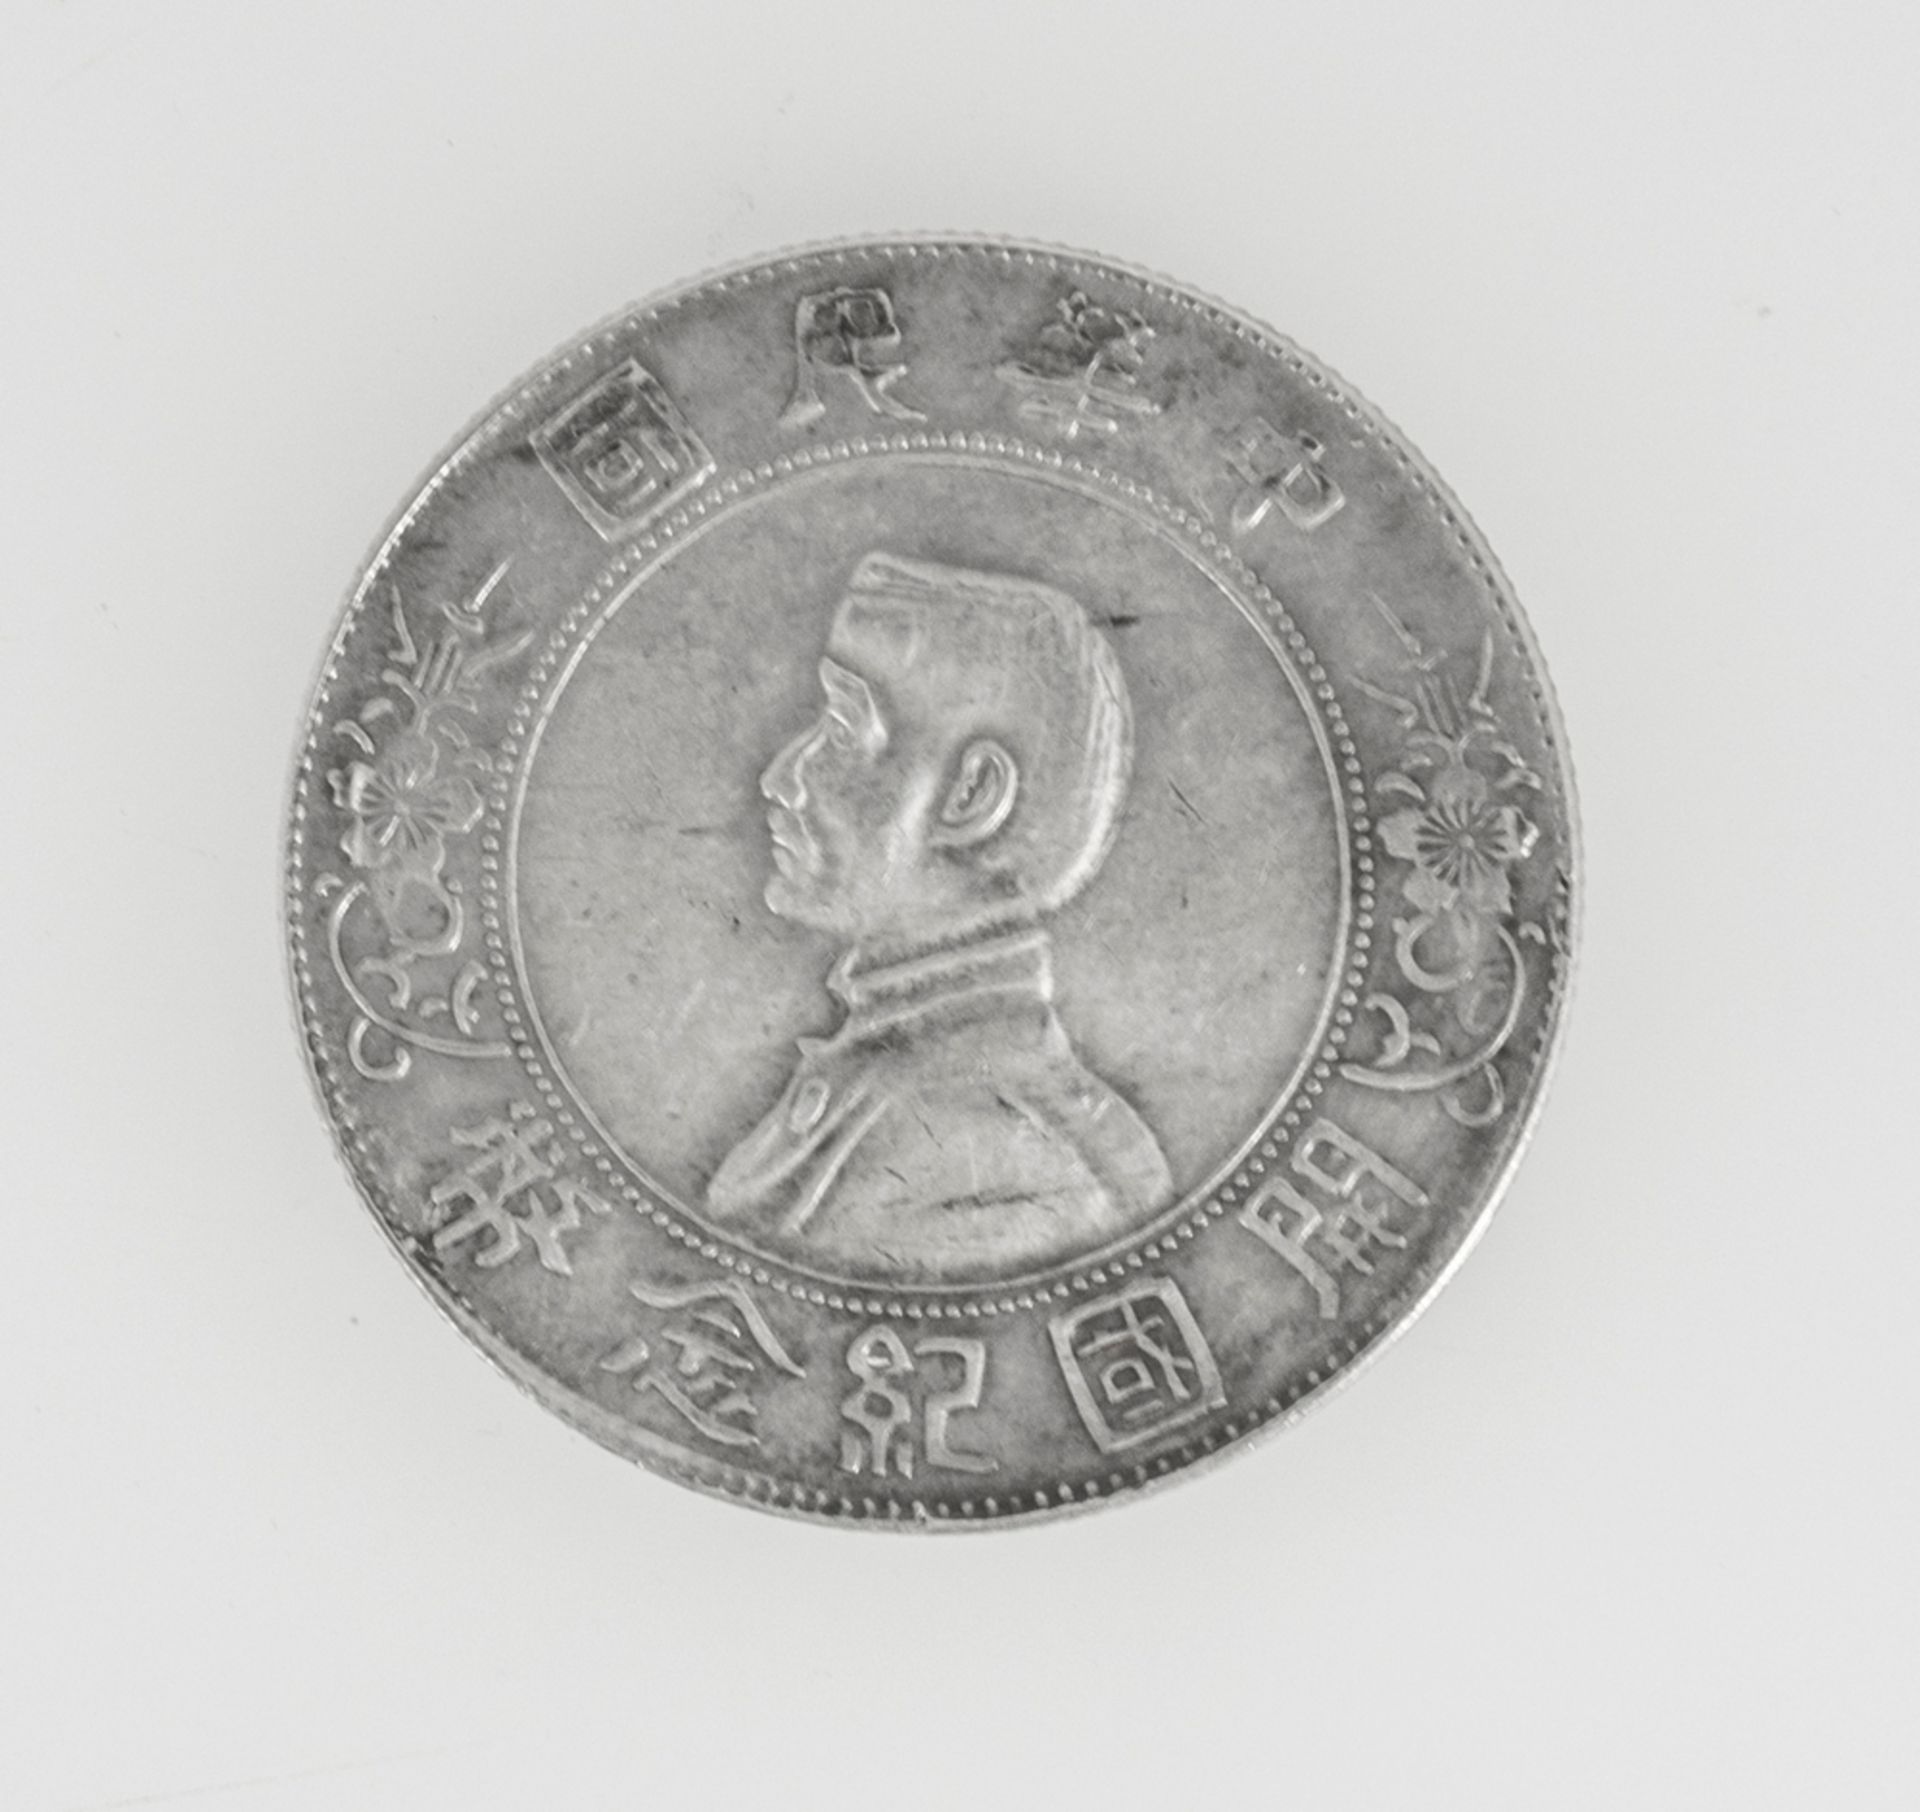 China Republik, 1 Dollar "Dr. Sun Yat Sen". Silber. Erhaltung: ss.